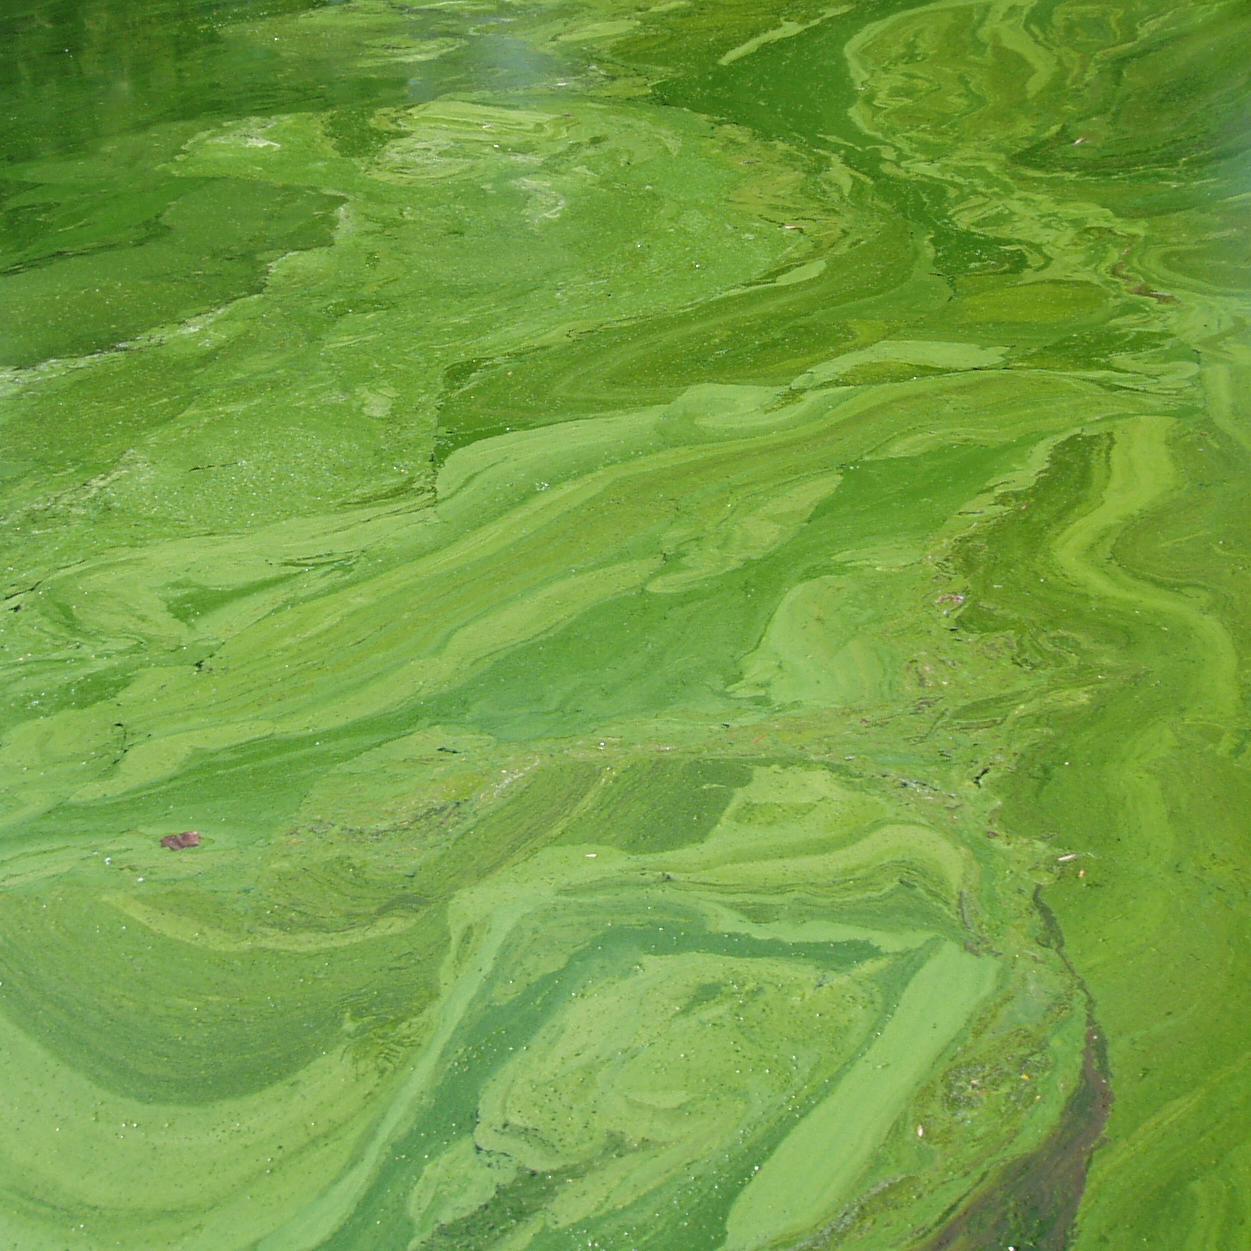 #Cyanobacteria #AlgaeBloom #CitSci A multi-platform based global cyanobacterial harmful algal blooms monitoring|For more info plz contact:cyanotracker@gmail.com